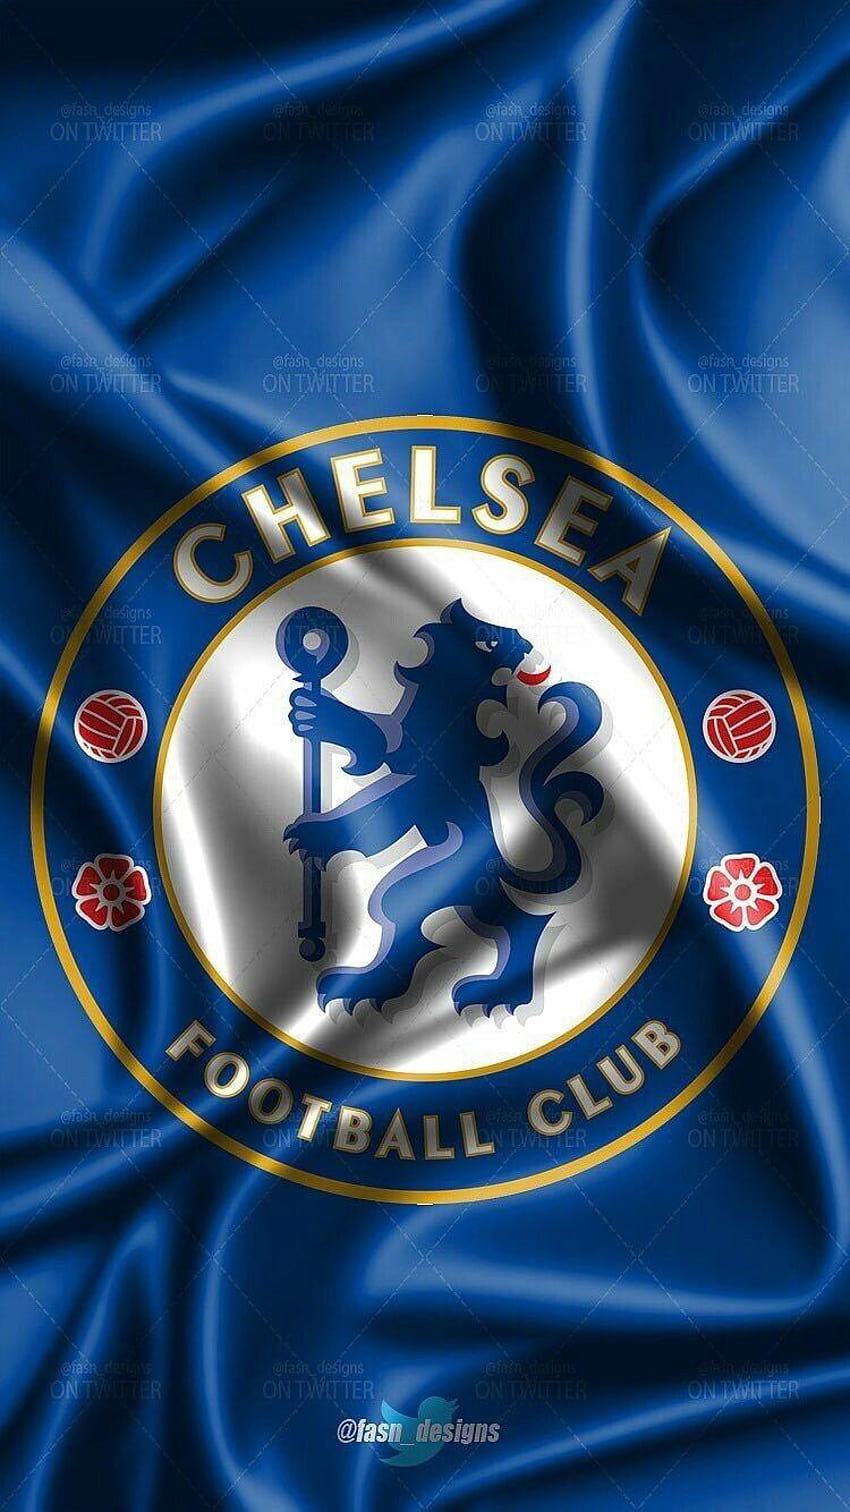 Chelsea Logo 2019 Impresionante Chelsea Fc 3d Logo, chelsea fc 2019 fondo de pantalla del teléfono